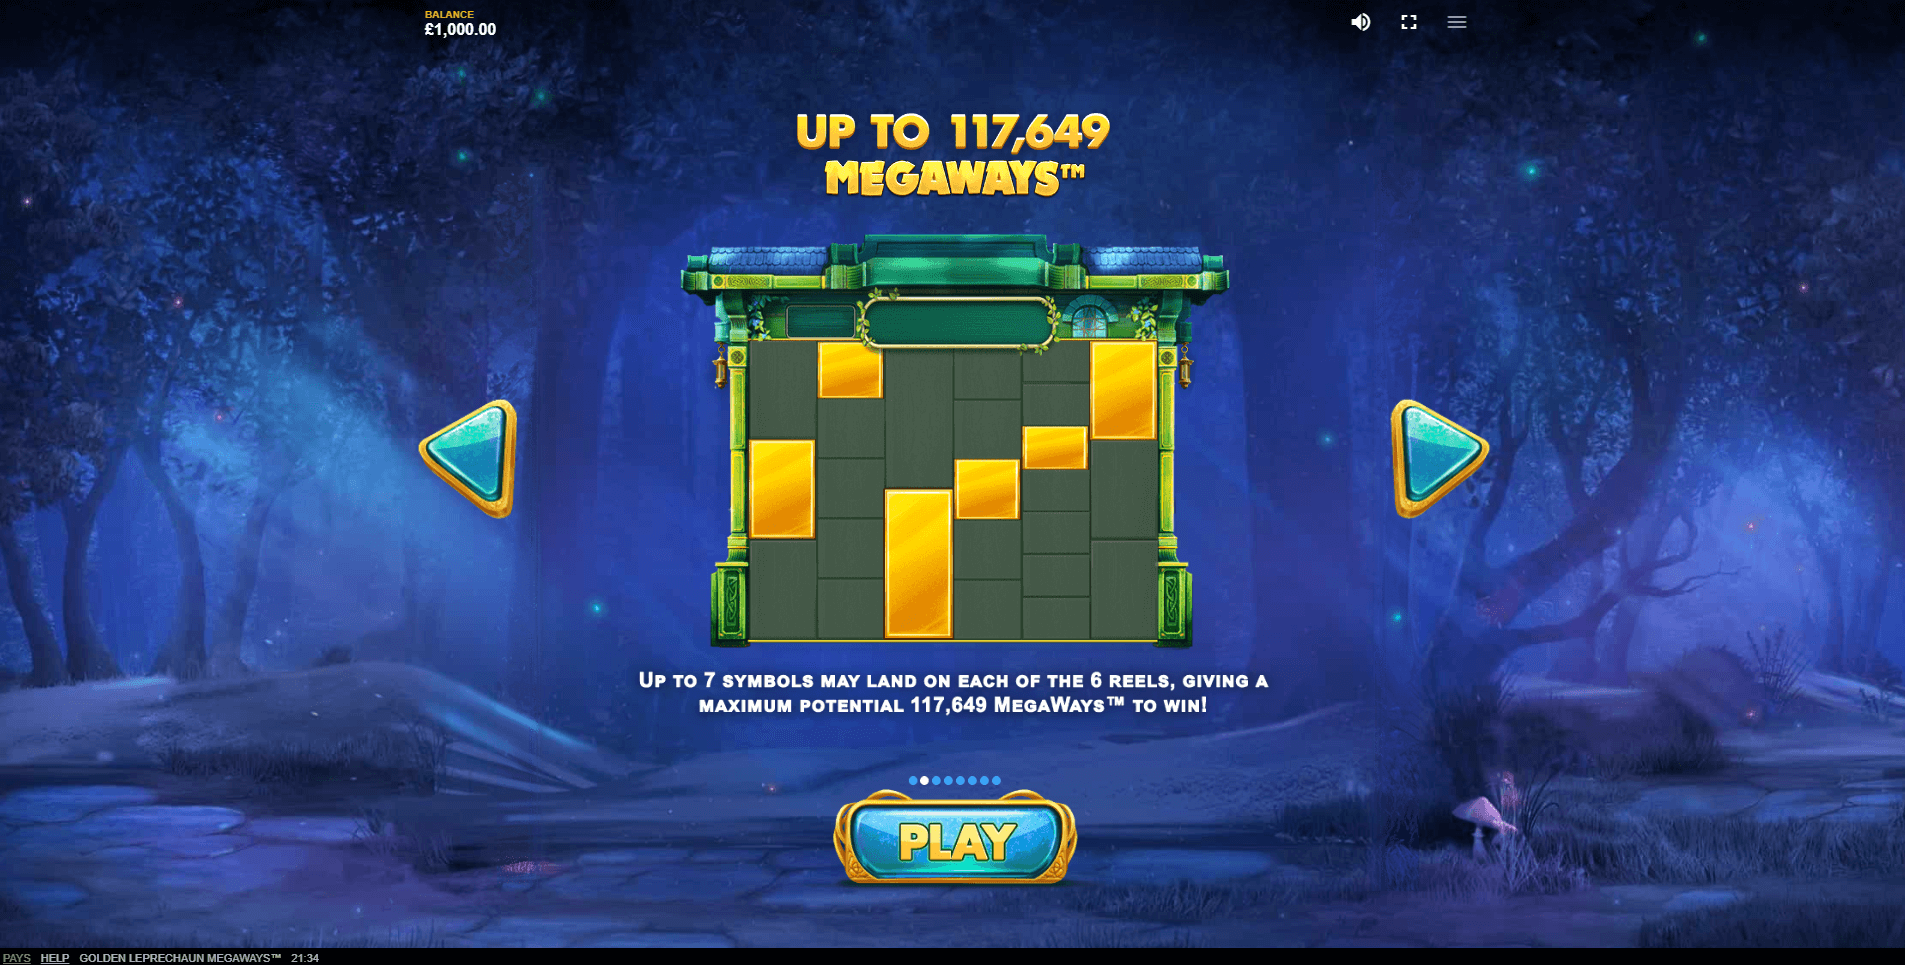 golden leprechaun megaways slot machine detail image 0